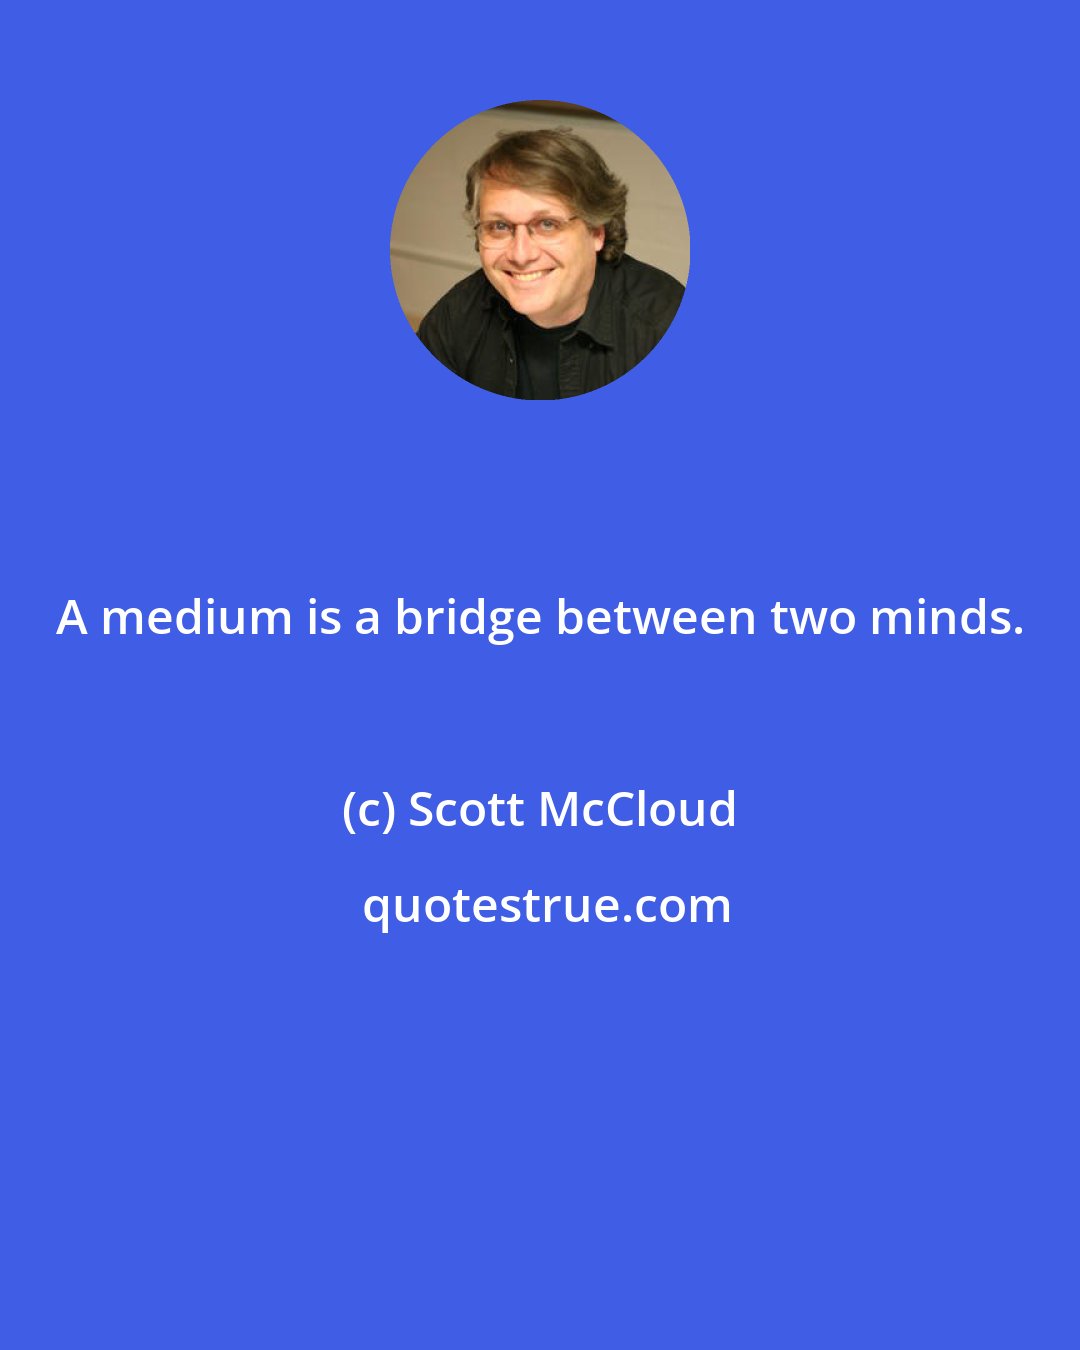 Scott McCloud: A medium is a bridge between two minds.